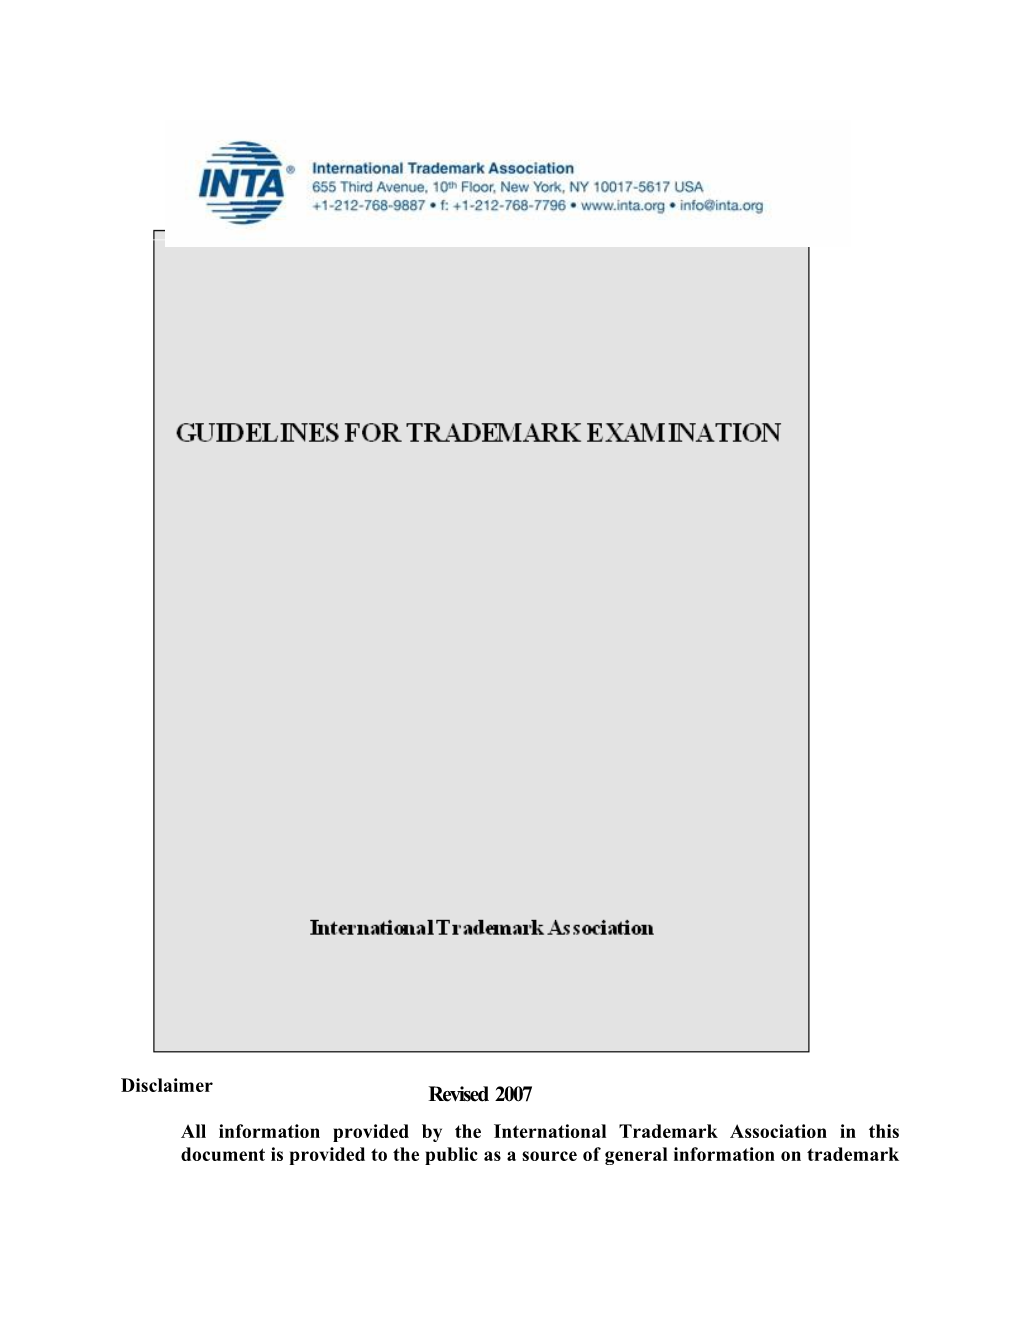 INTA Guidelines for Trademark Examination